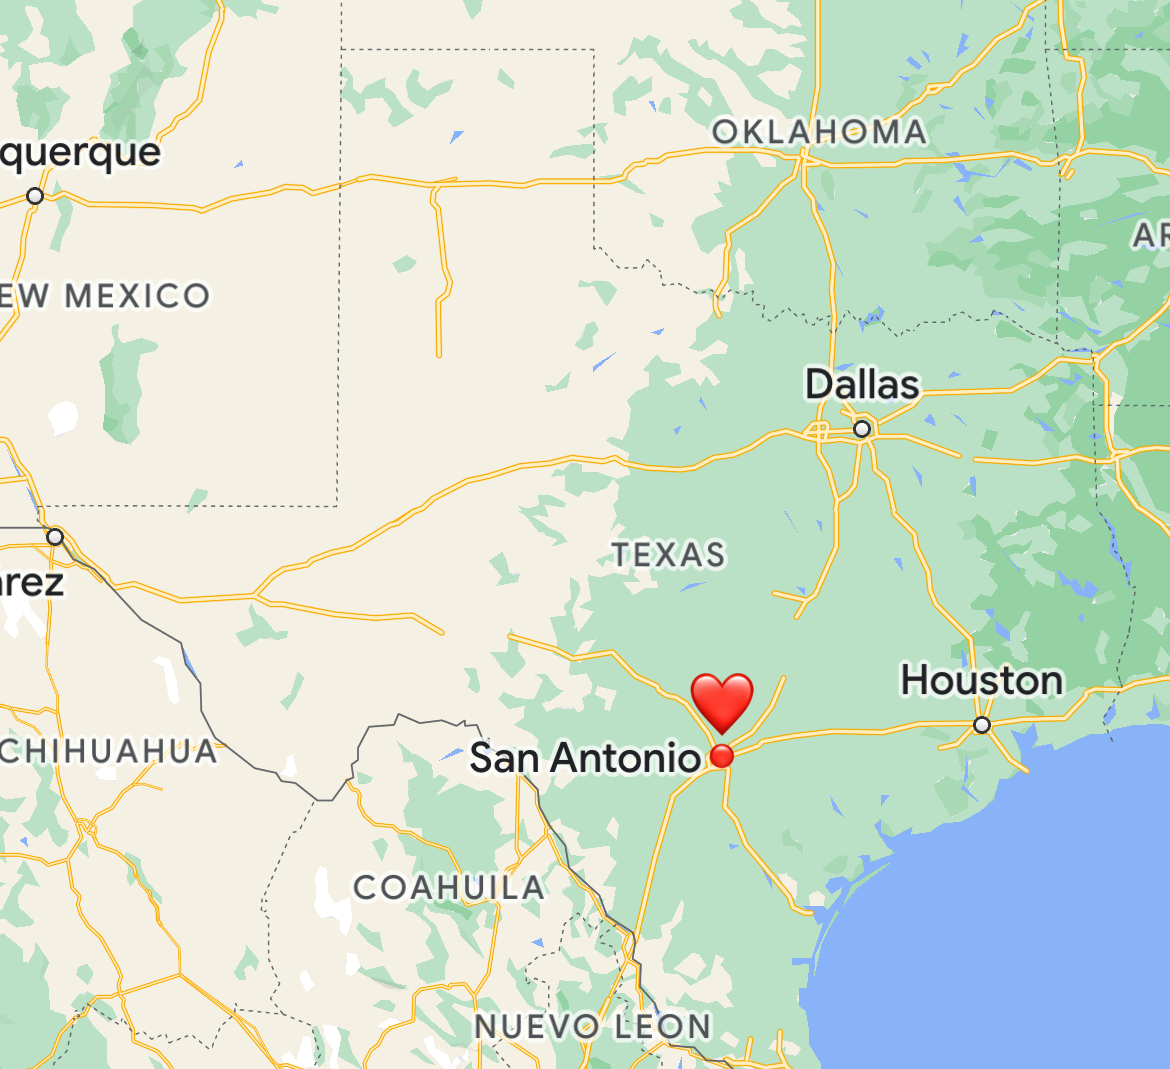 Where is San Antonio in Texas